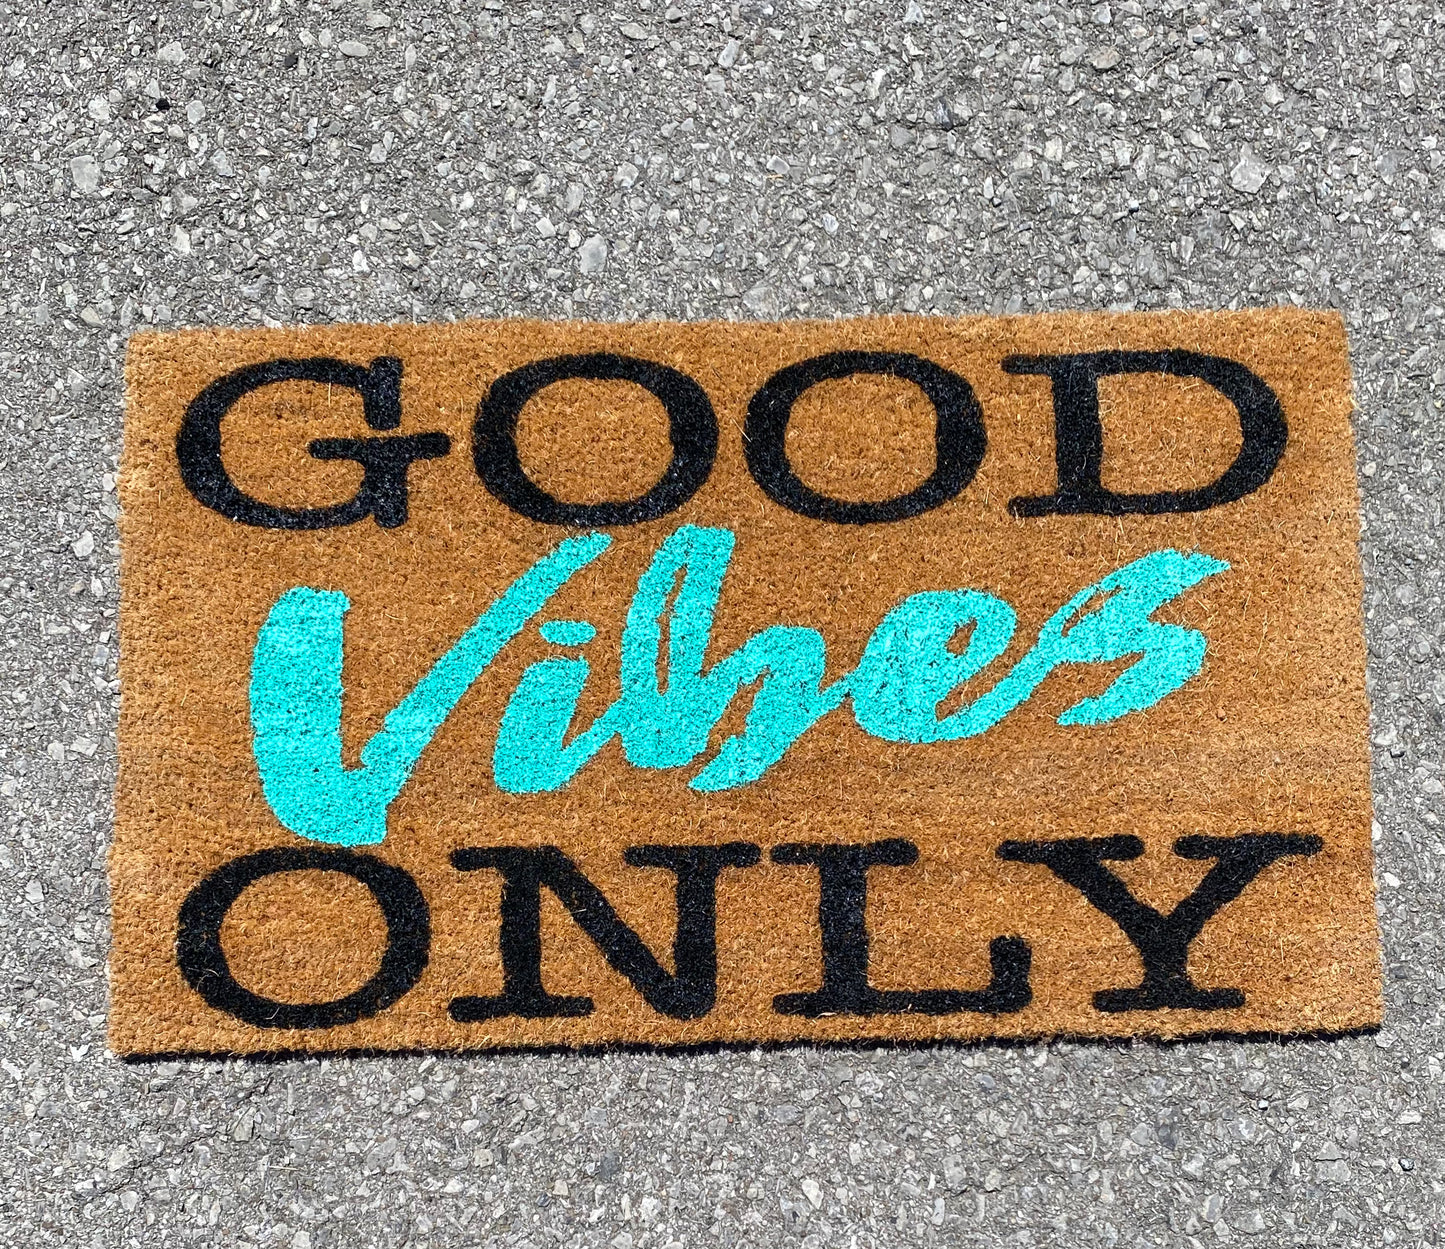 Good Vibes Only Doormat